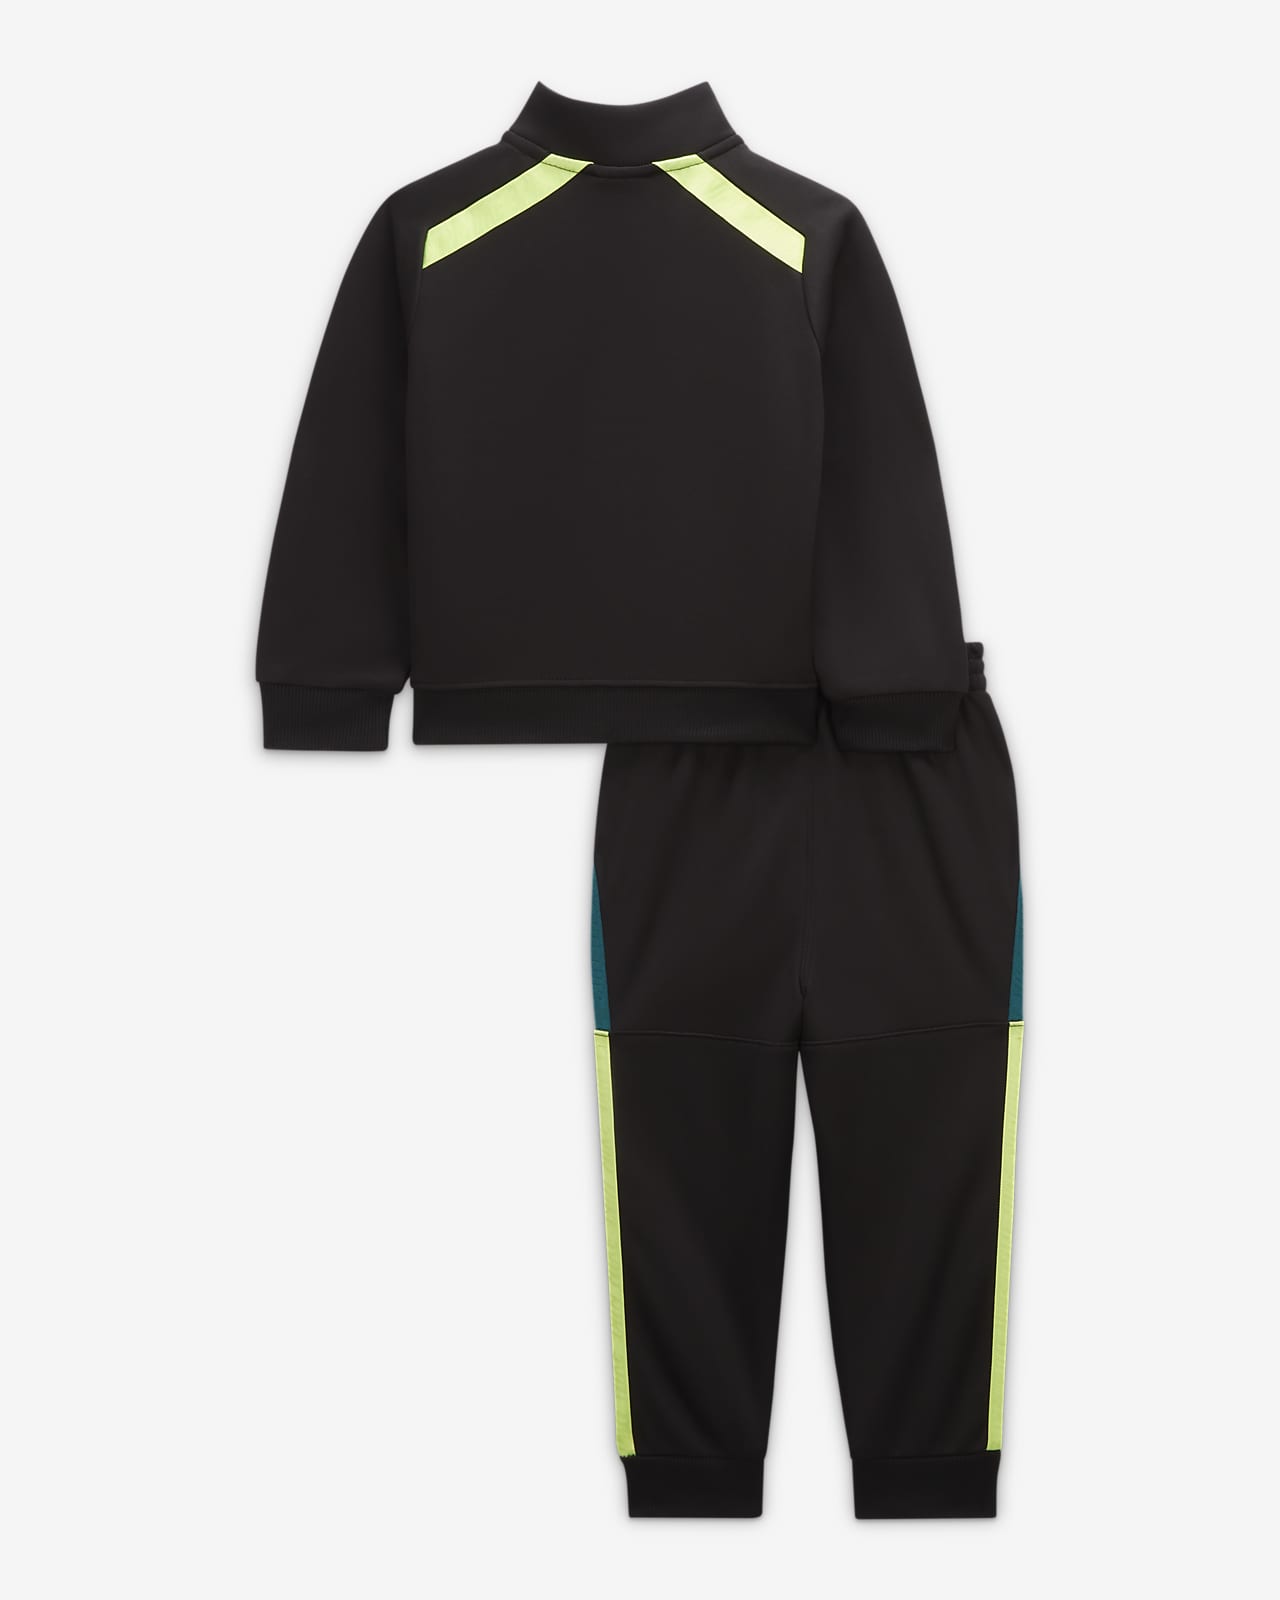 Nike Sportswear Taping Full-Zip Tracksuit. Dri-FIT Baby Set